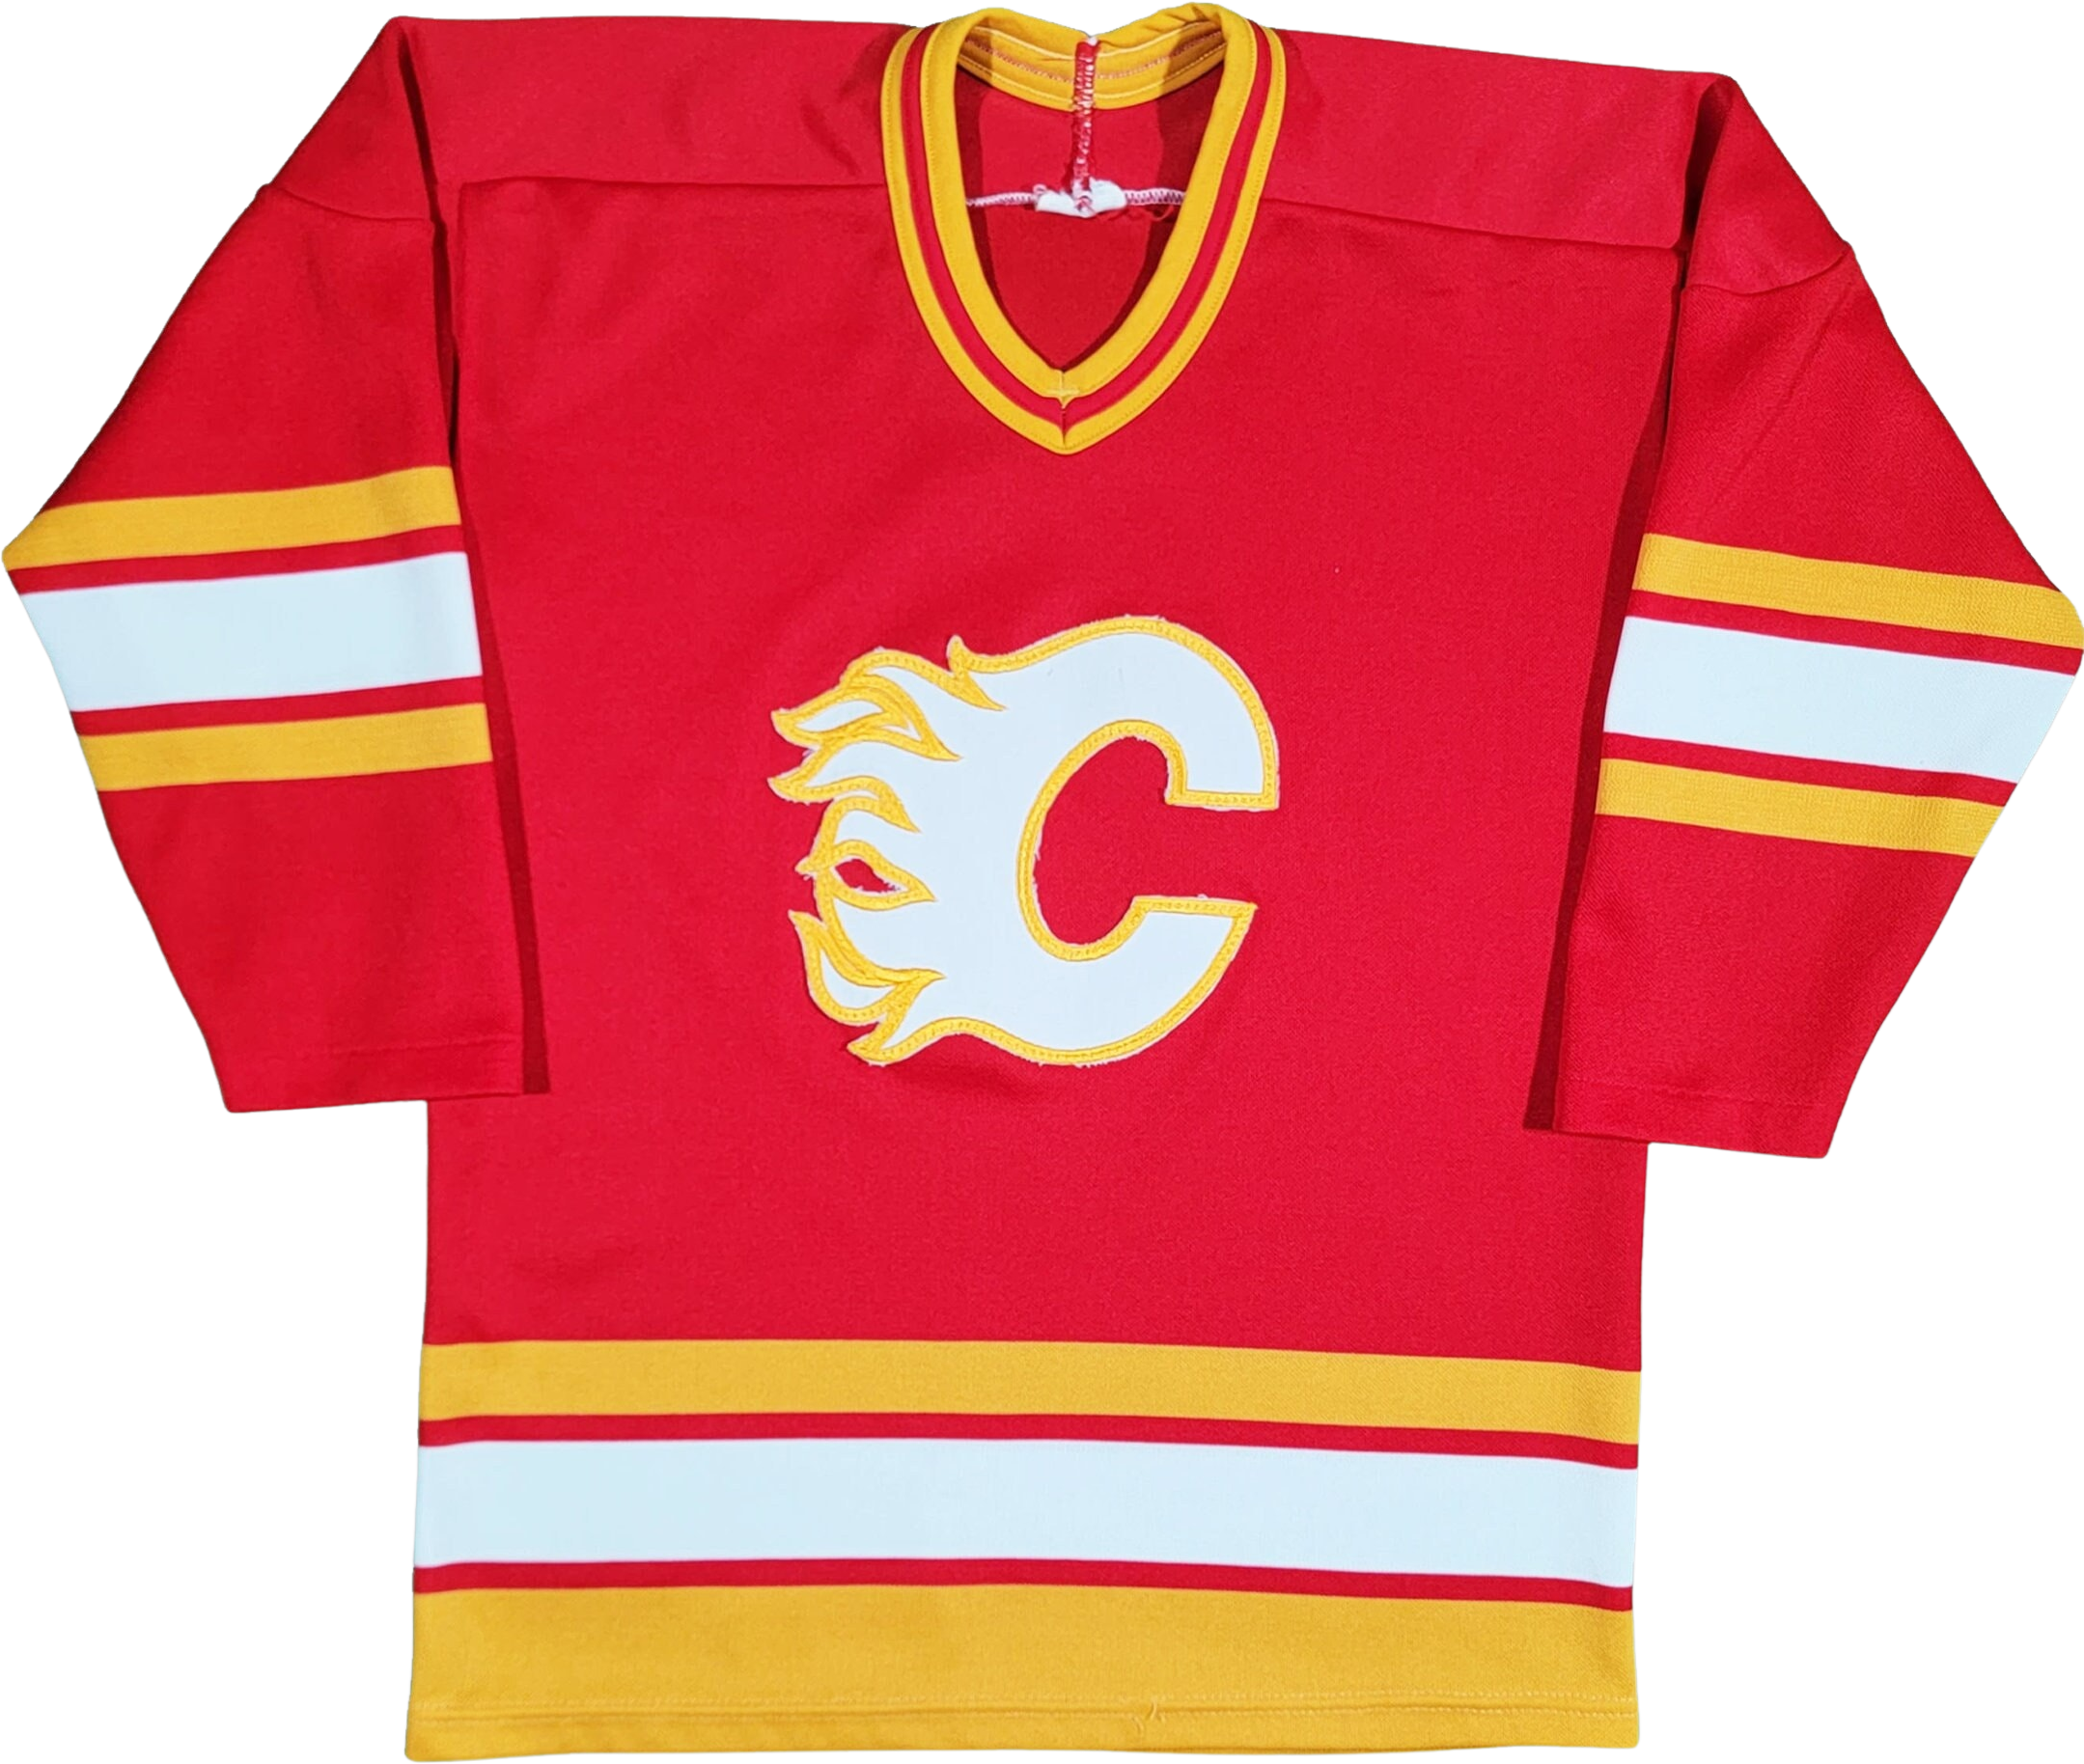 1989 calgary flames jersey